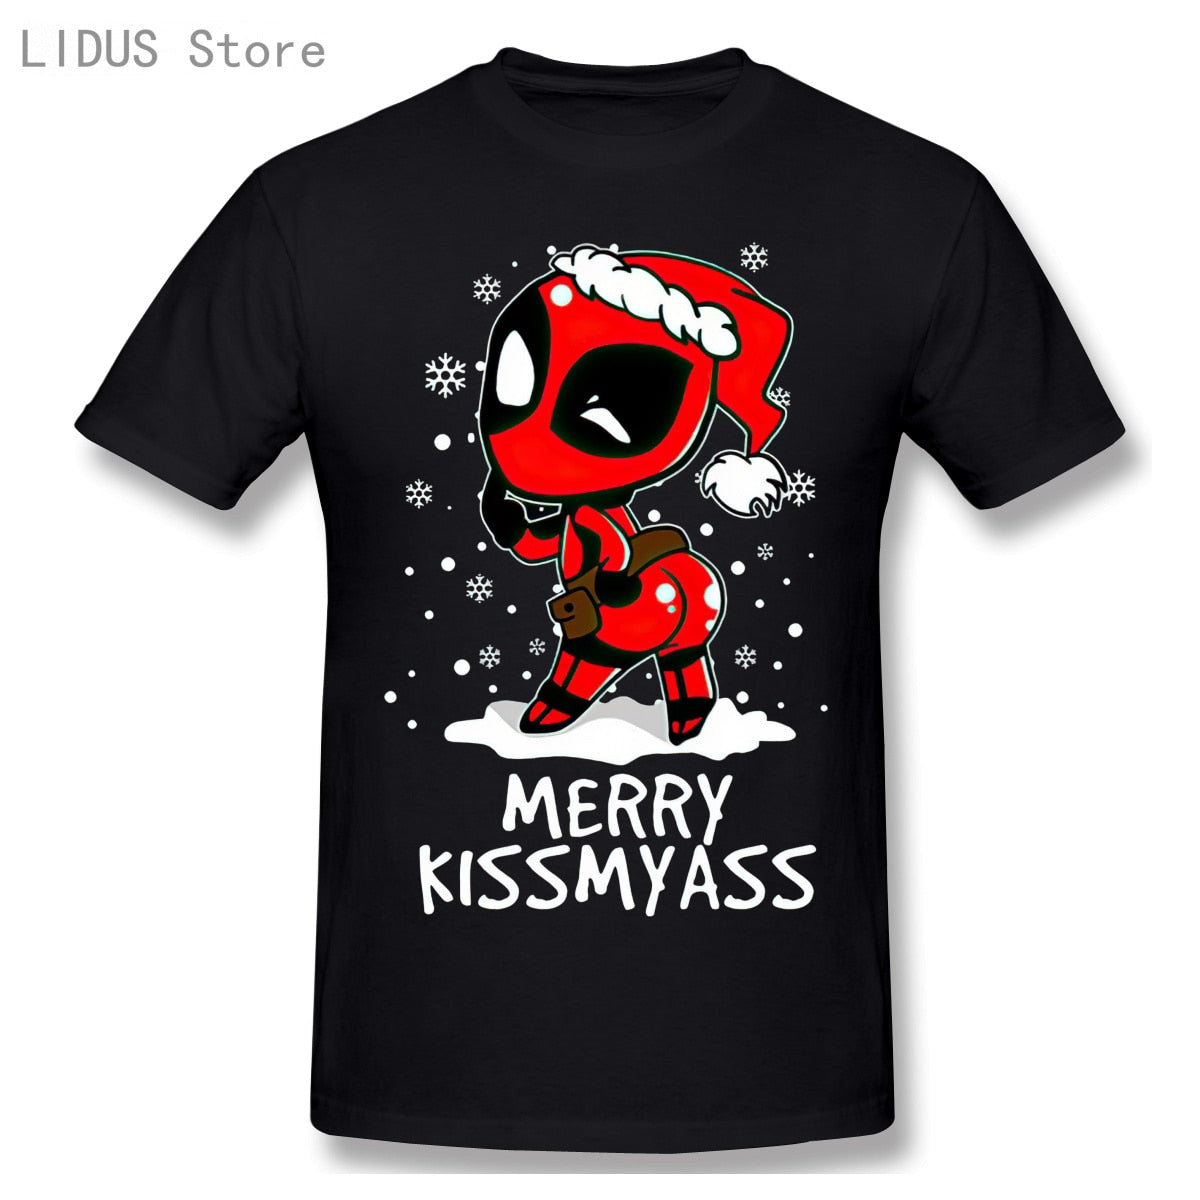 Deadpool Marvel Printed MERRY KISSMYASS T-Shirt (Colors Available)